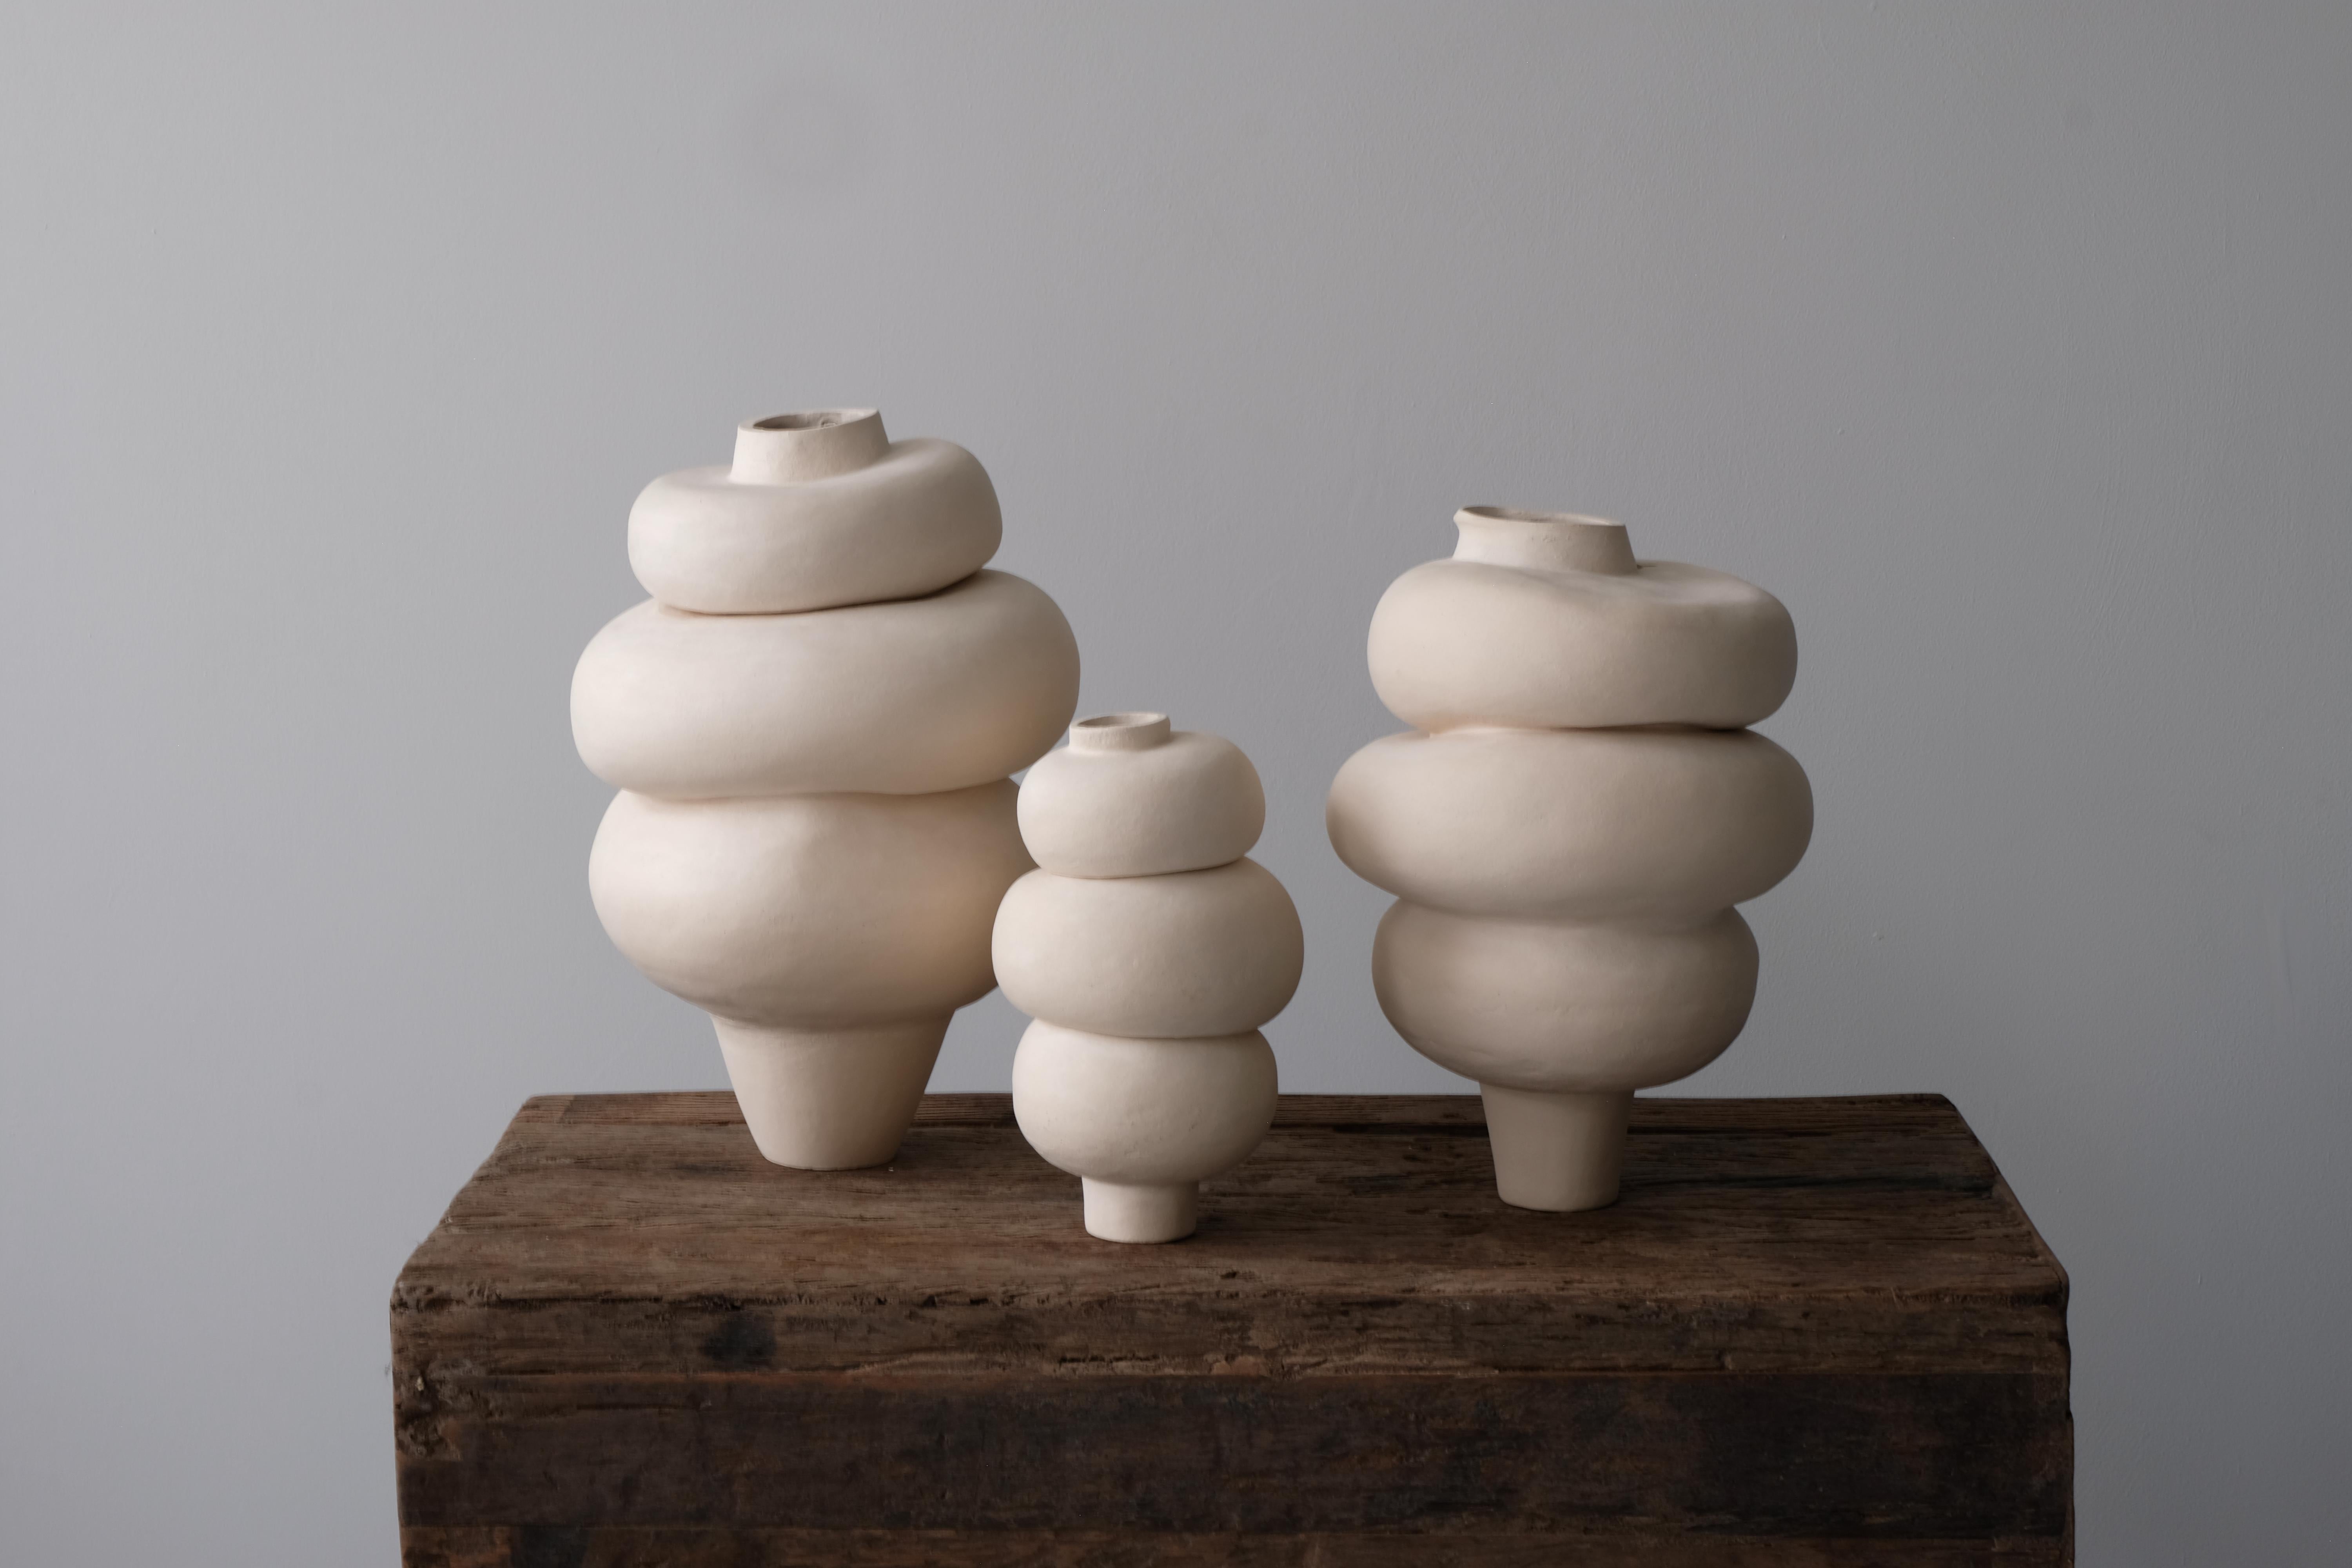 Dutch Contemporary Sculptural Ceramic Art Modder Calmness by Françoise Jeffrey For Sale 3